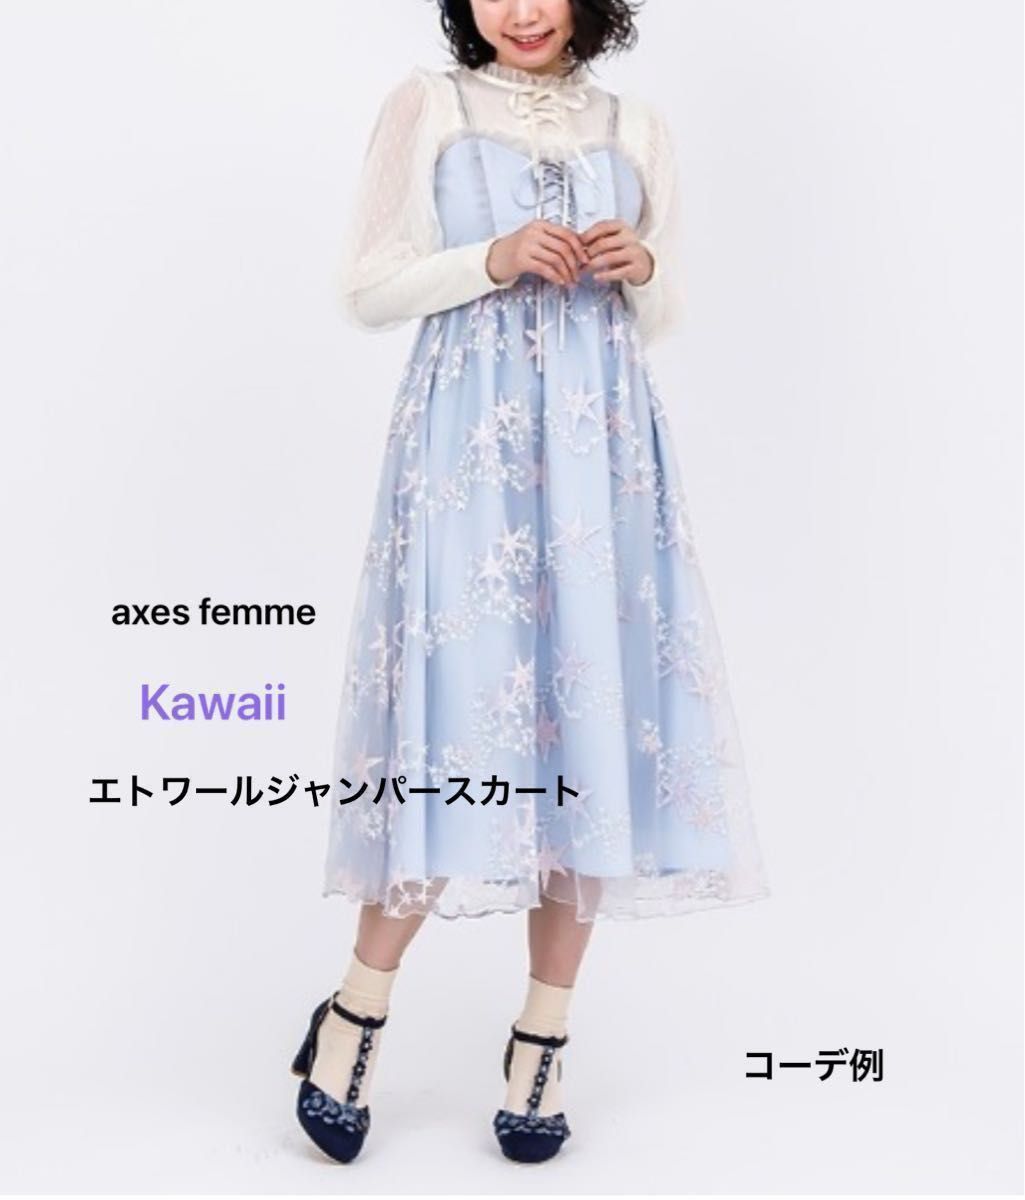 axes femme kawaii エトワールジャンパースカート サックス｜PayPayフリマ